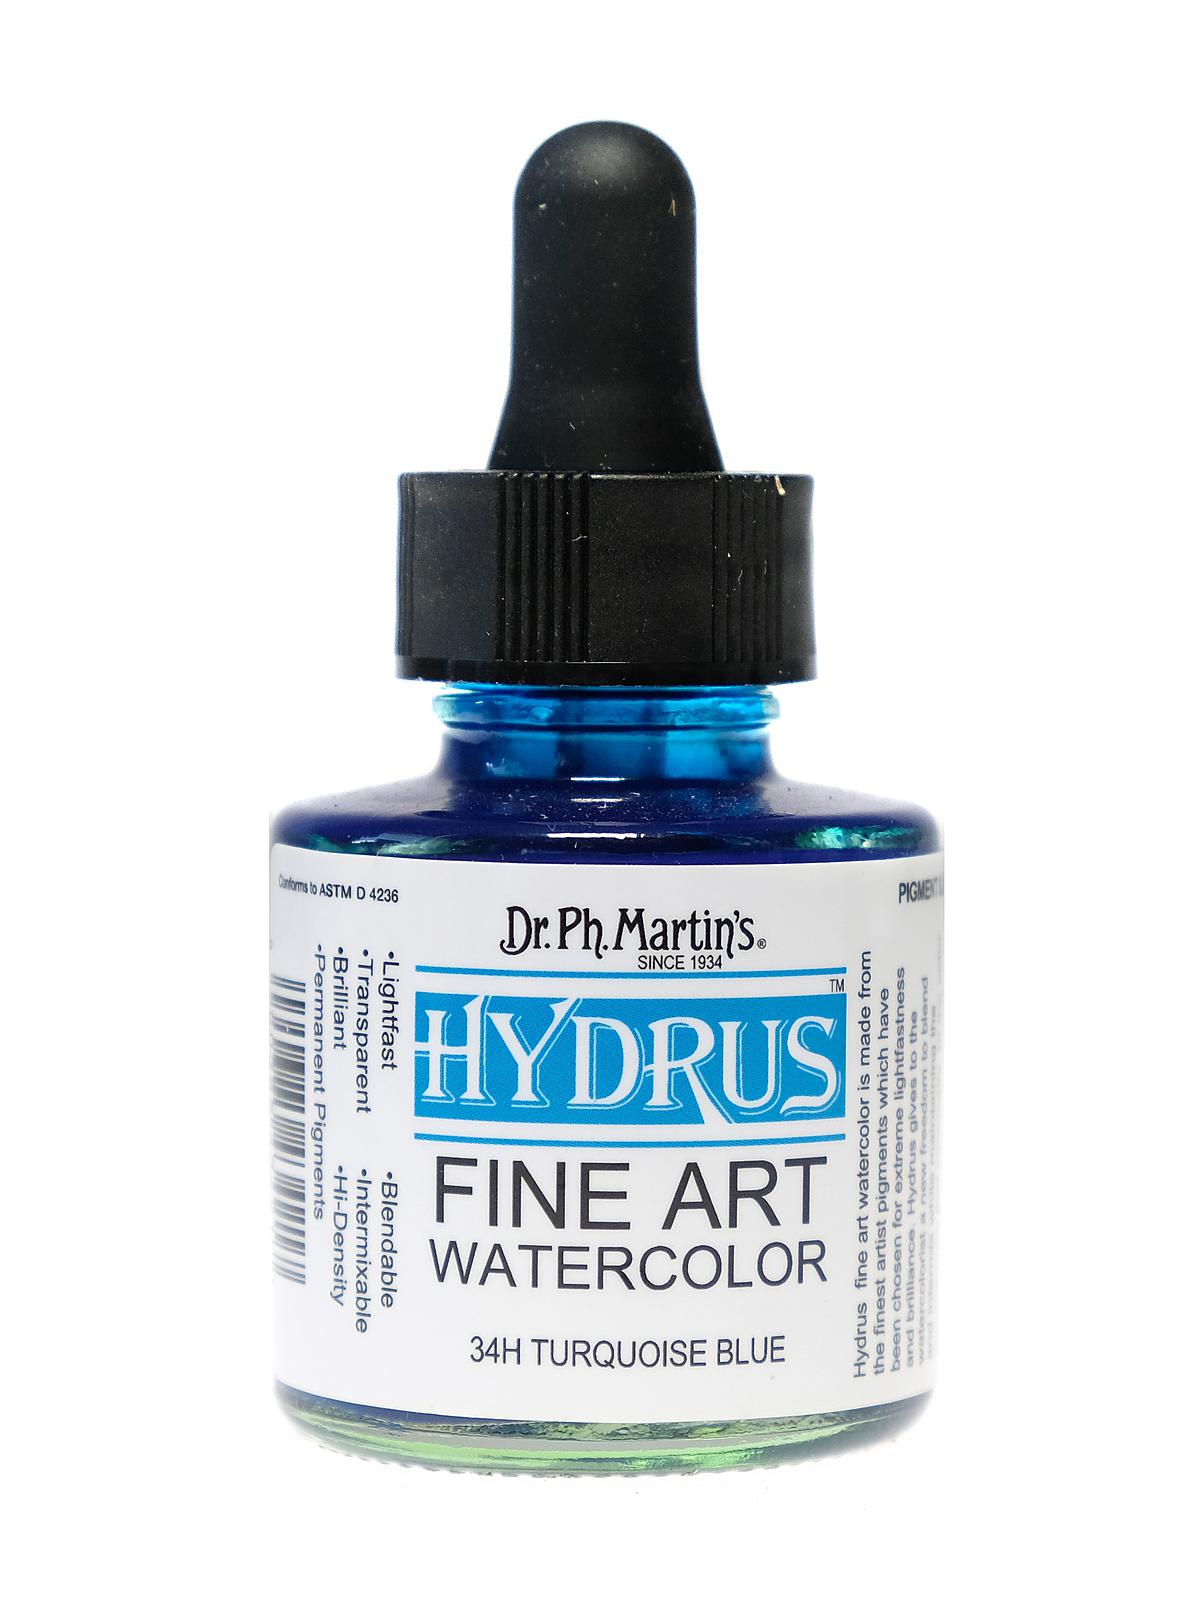 Hydrus Fine Art Watercolor Turquoise Blue